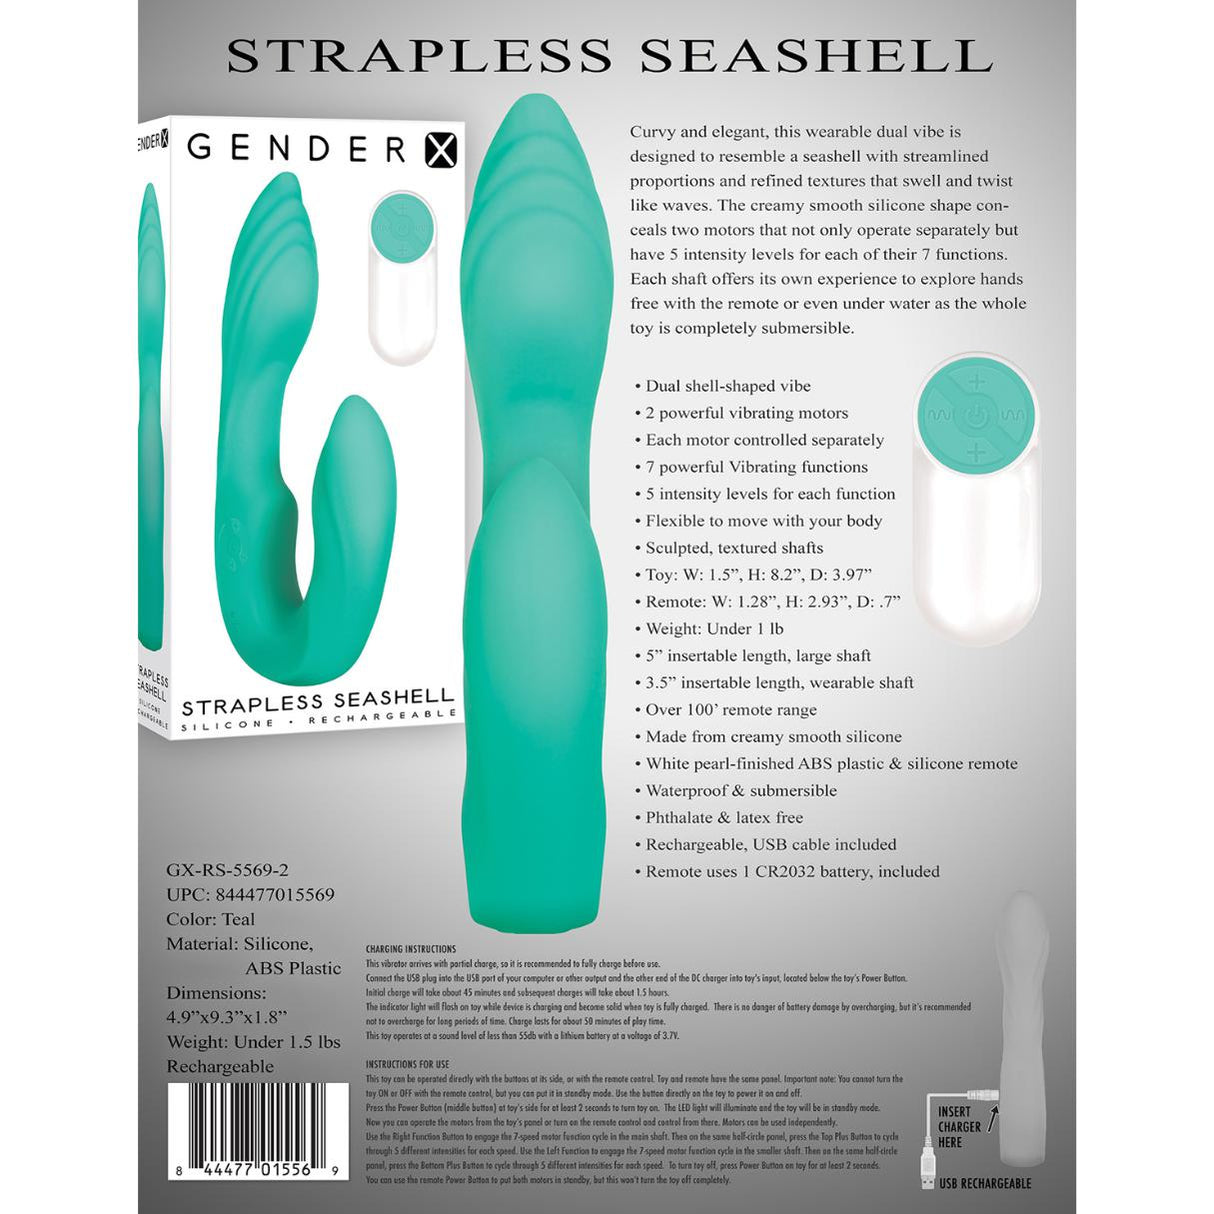 Gender X Seashell Rechargeable Strapless Dildo